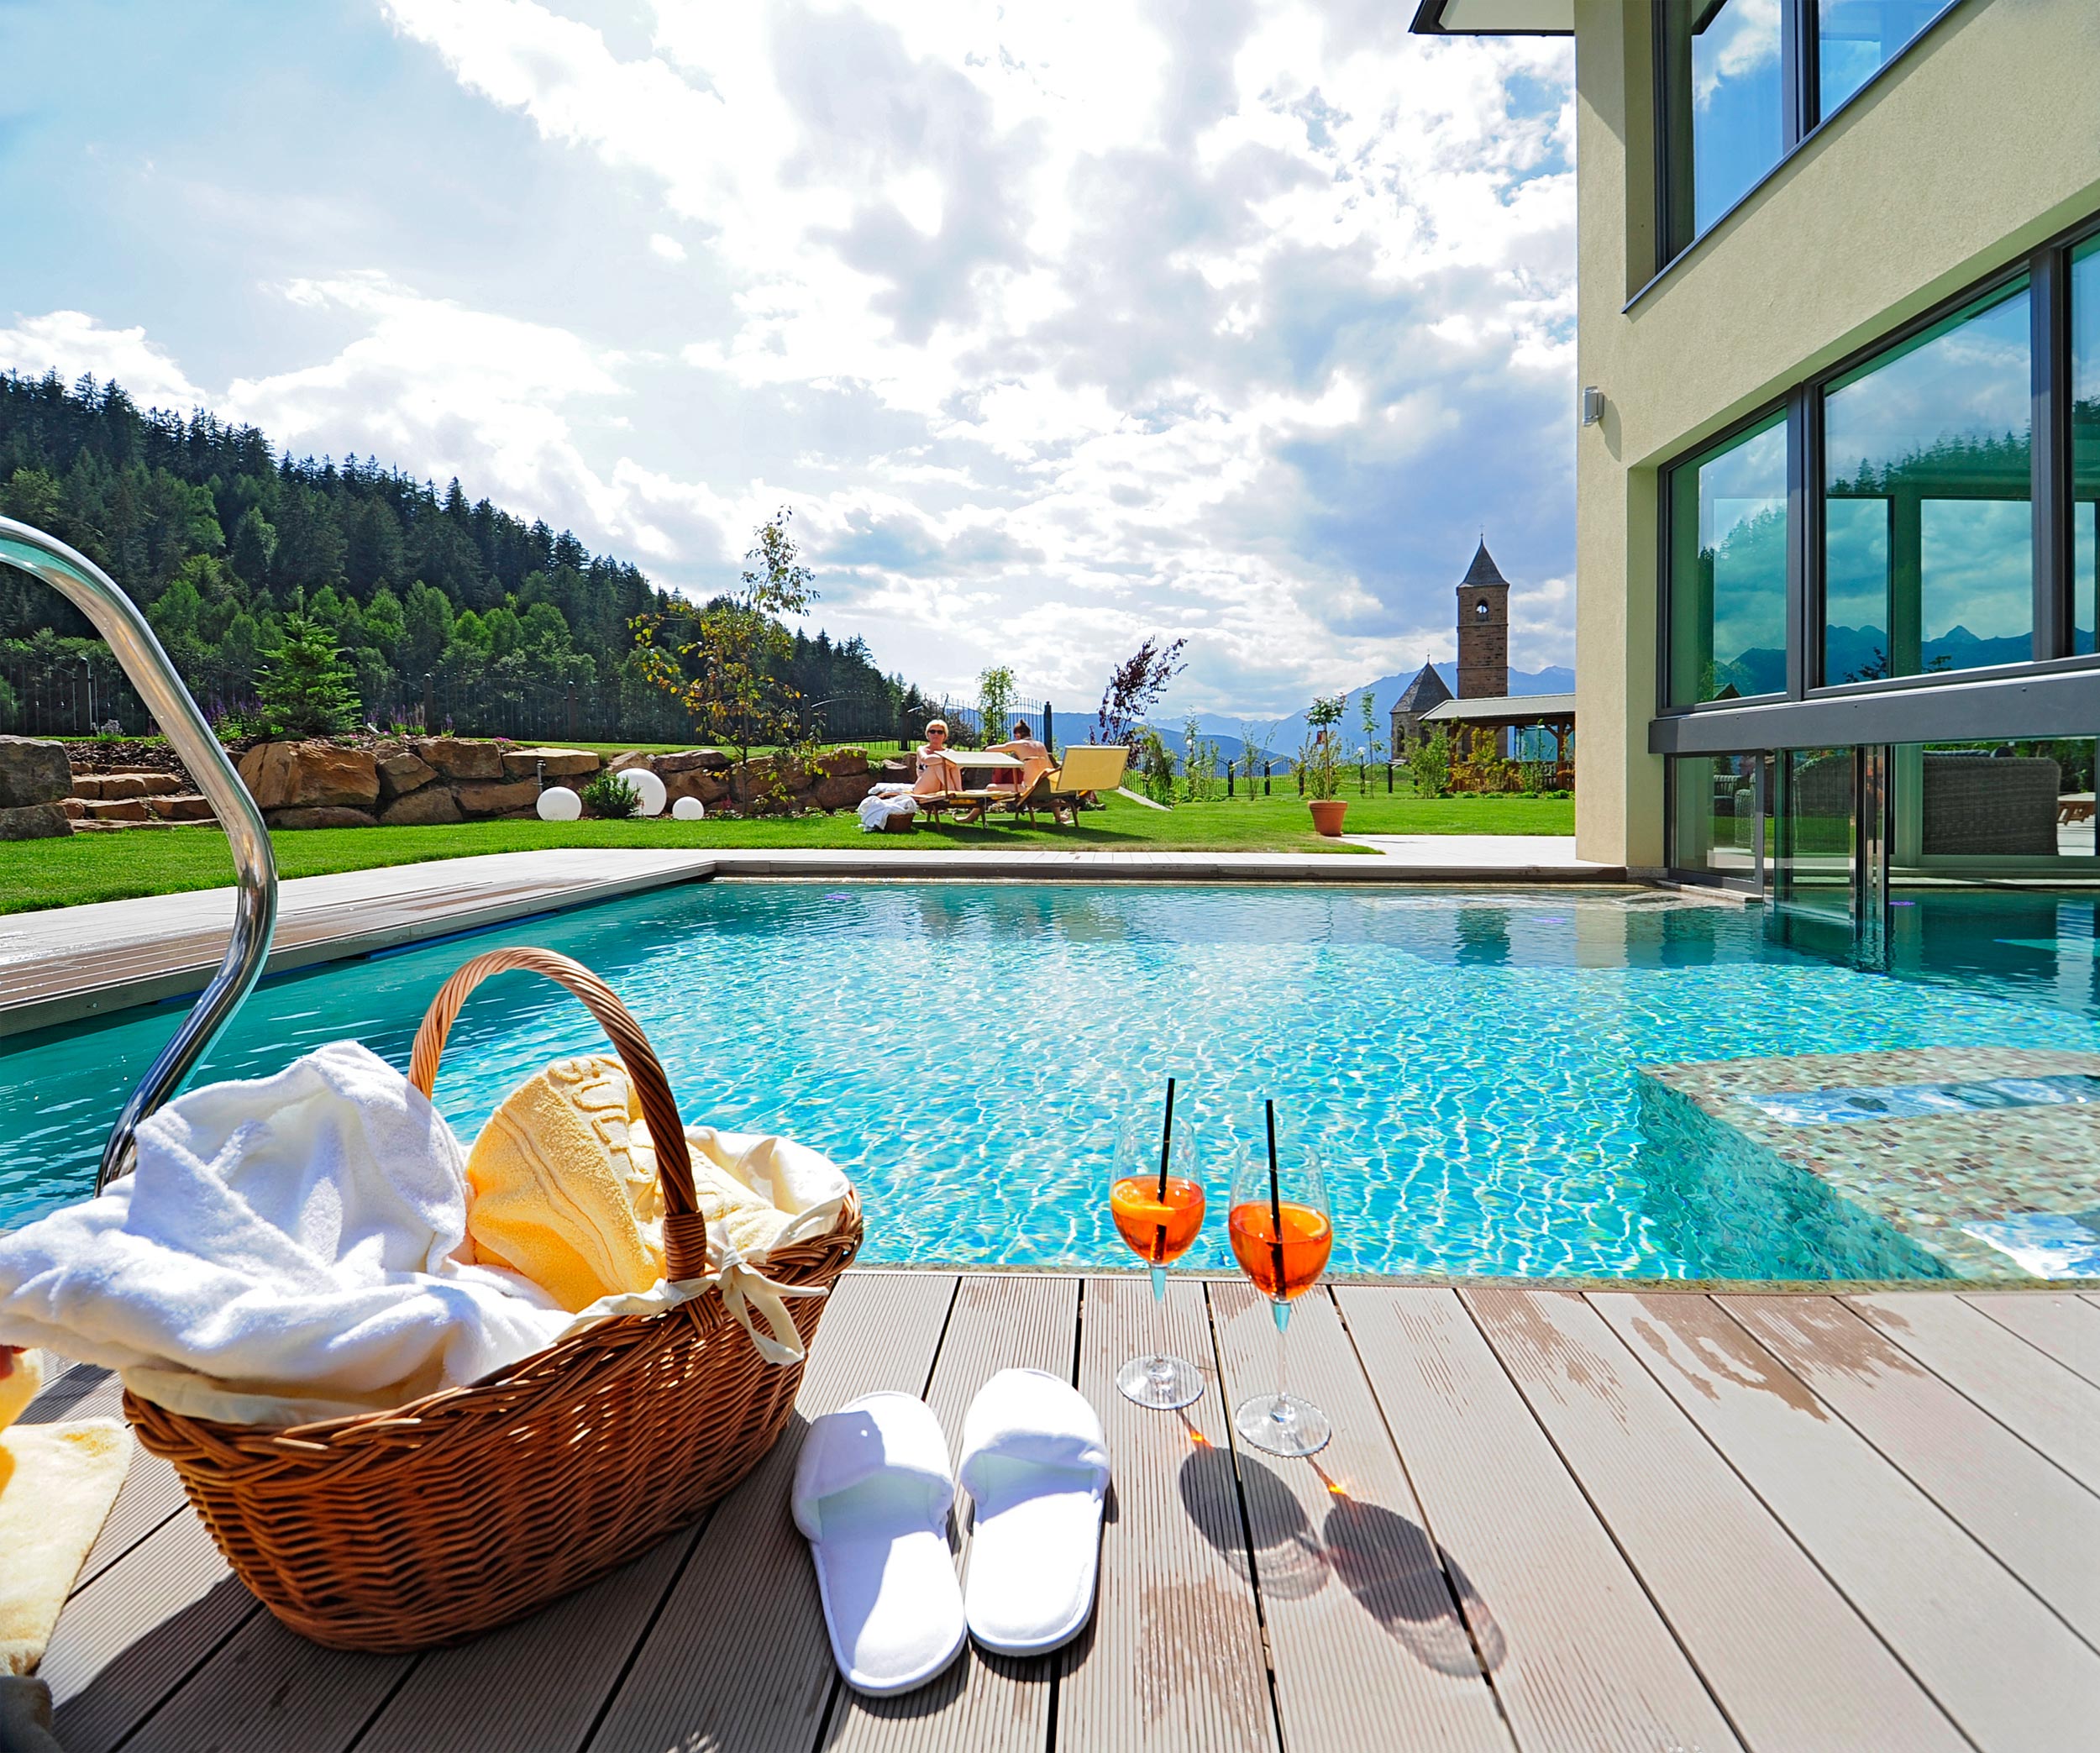 4 Sterne Hotel Südtirol Freibad und Garten | Hotel 4 stelle Alto Adige Piscina esterna e giardino | 4 star Hotel South Tyrol pool and garden